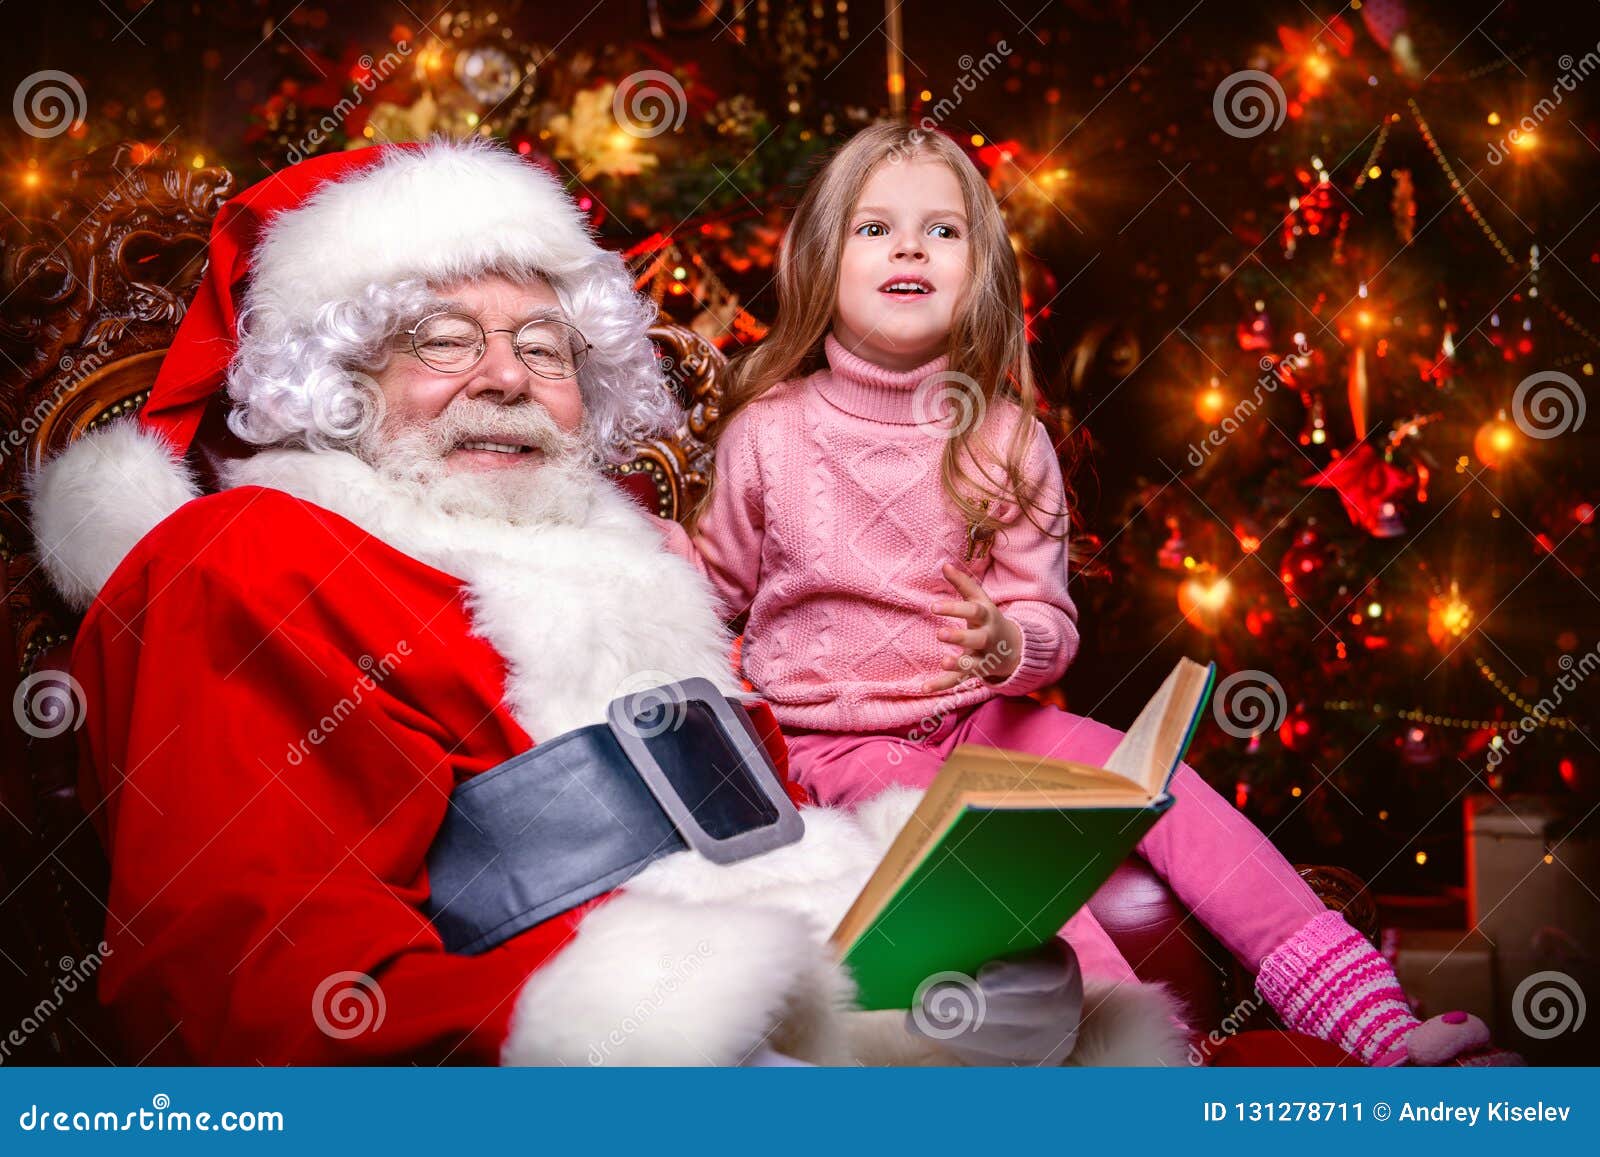 santa visits near reading